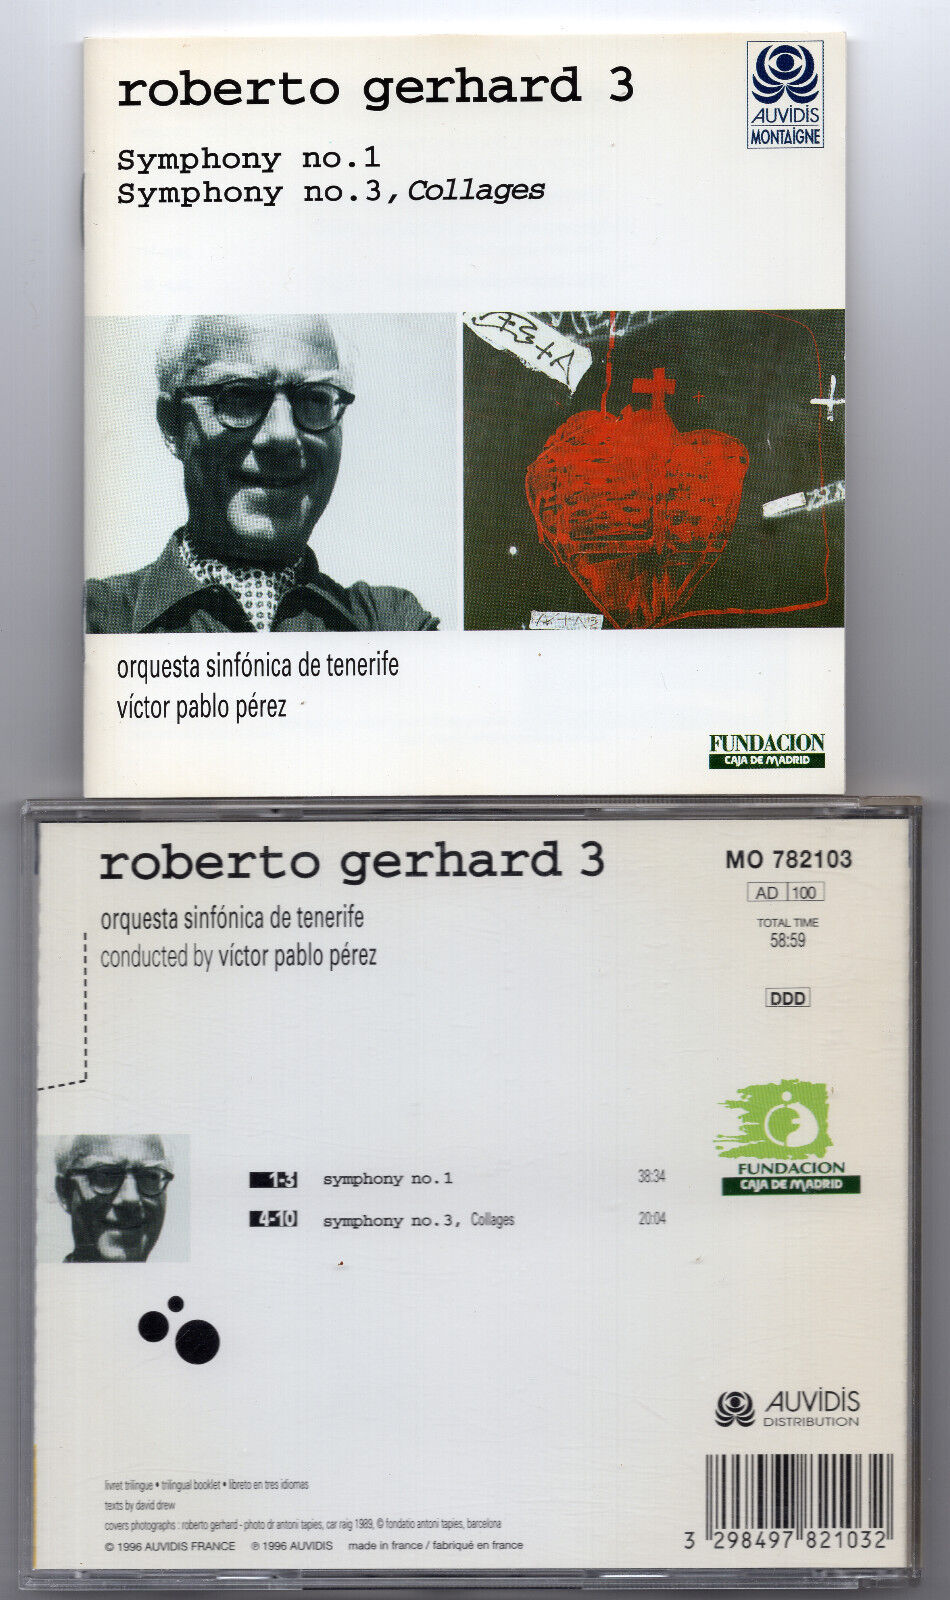 Roberto Gerhard - Symphonies 1 & 3: Collages, Auvidis/Montaigne Edition 3 CD